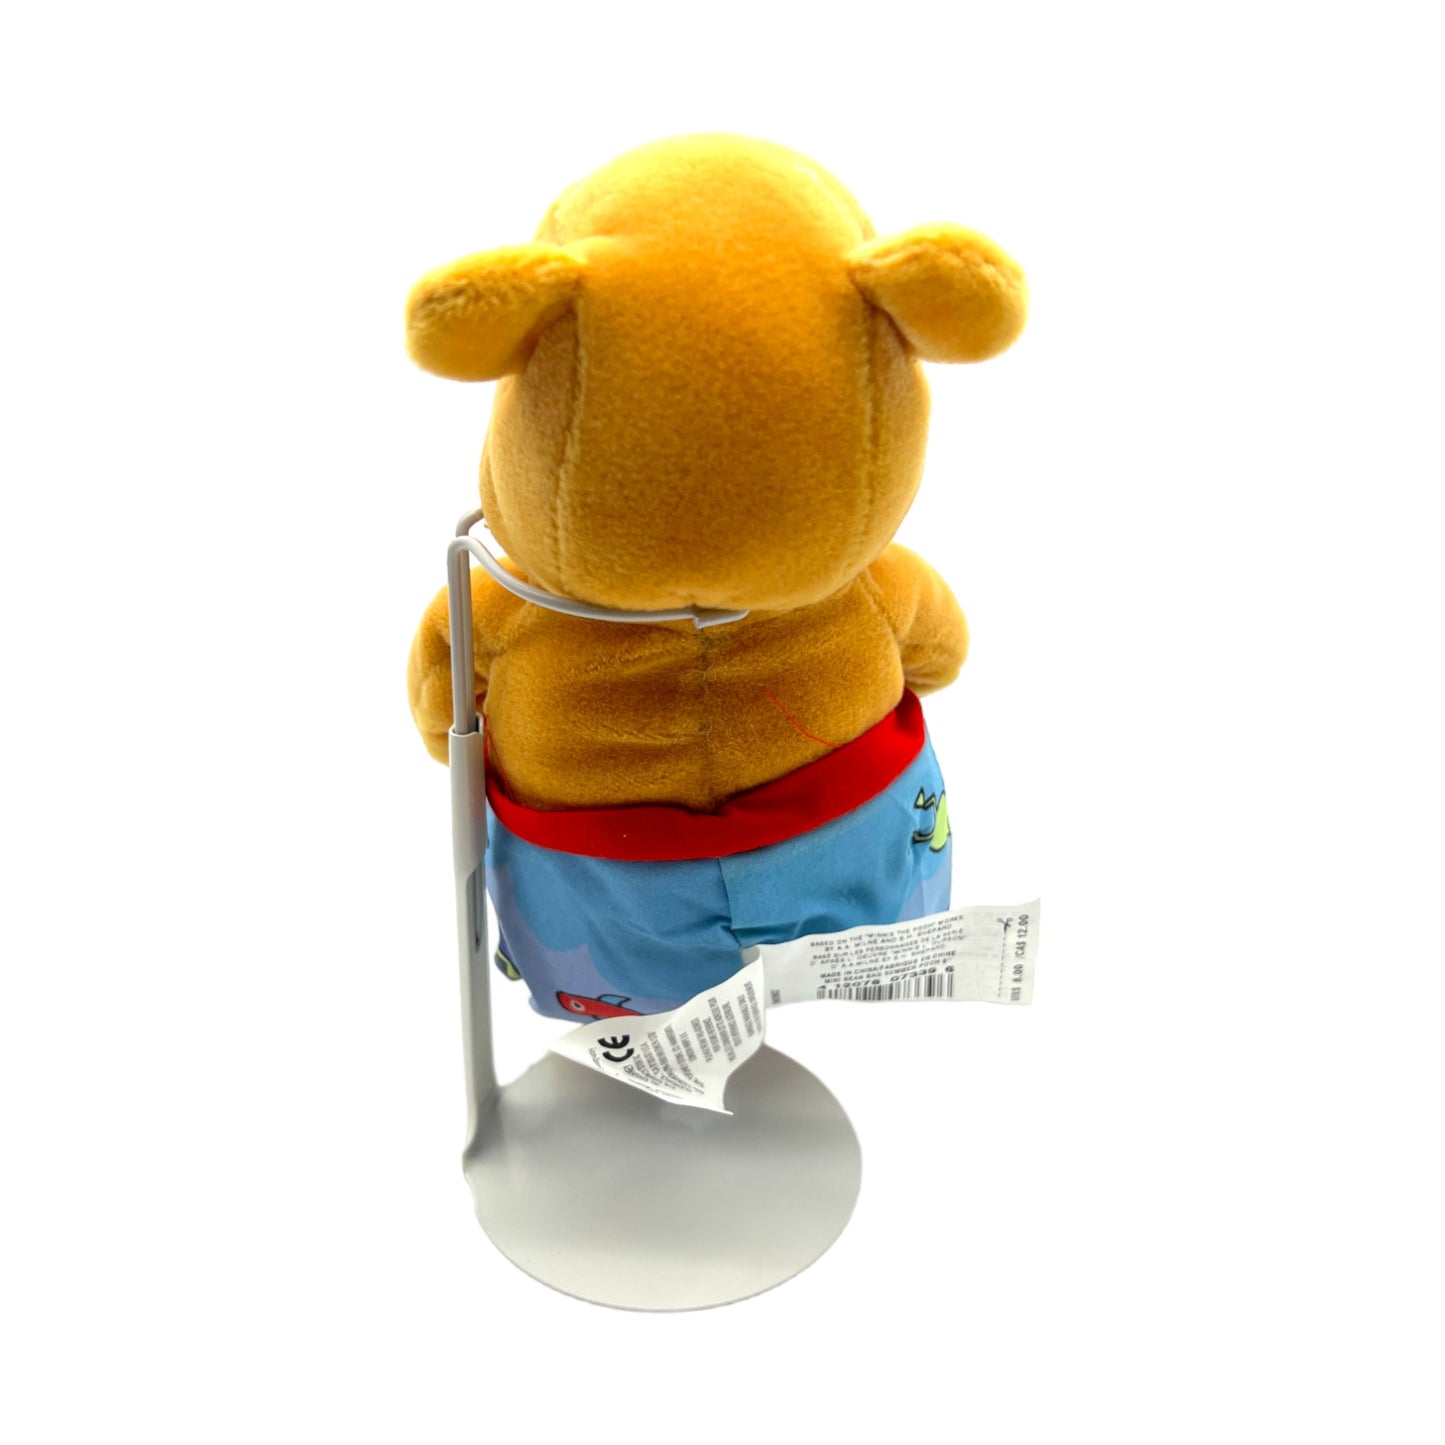 Disney Store - Summer Pooh Mini Bean Bag - 8"